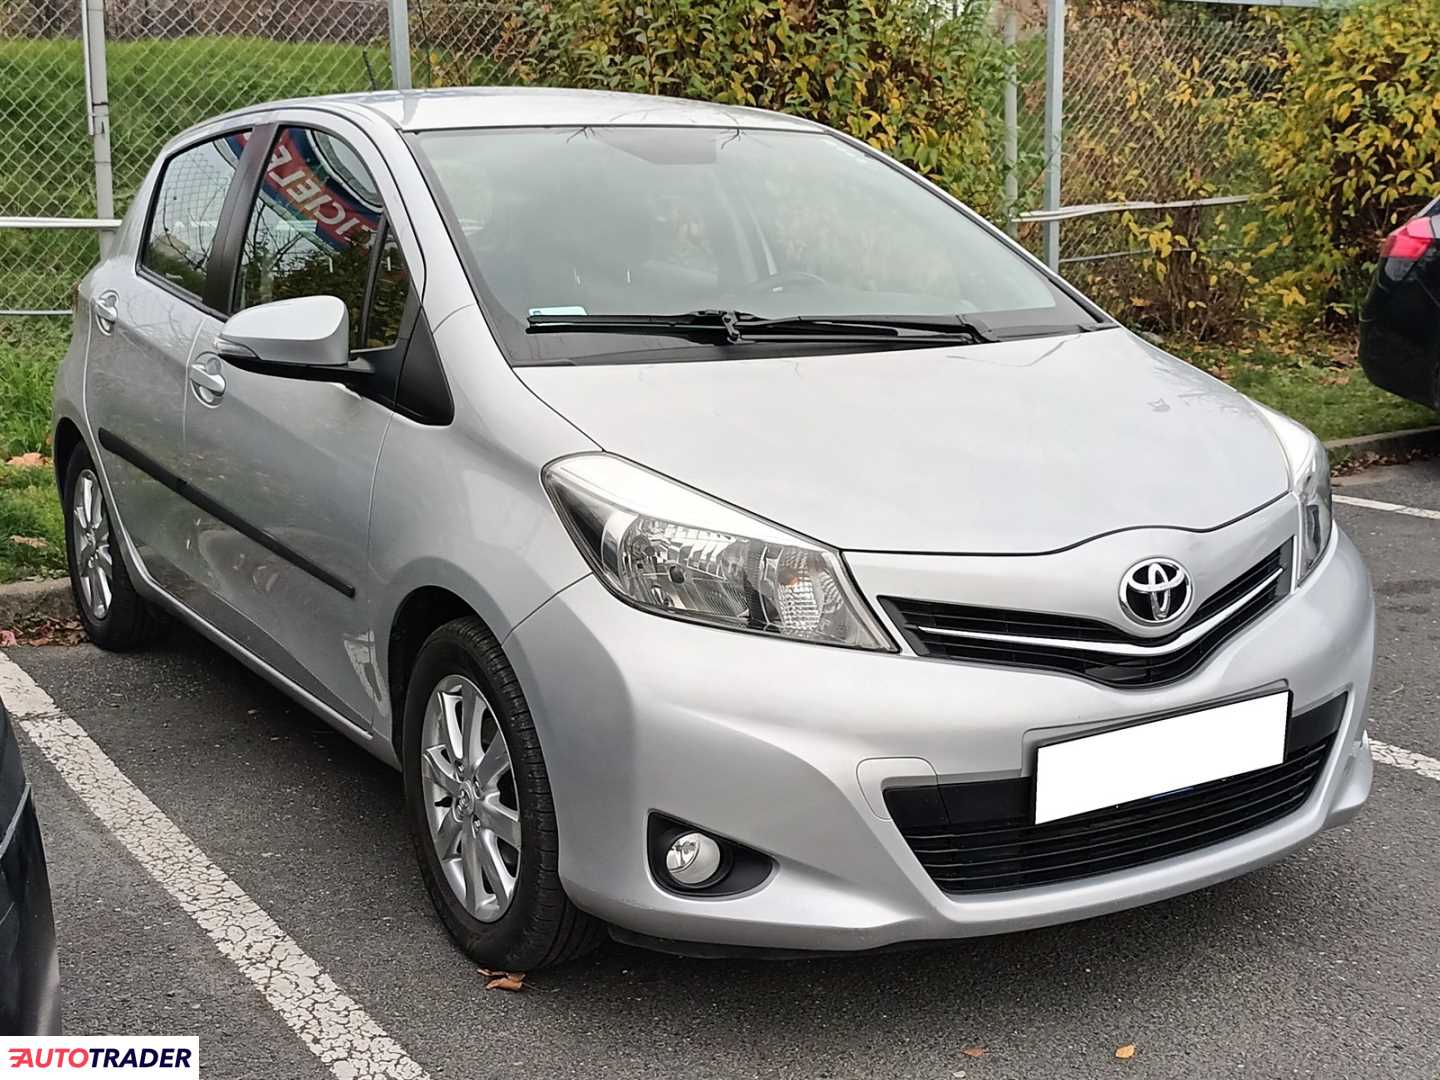 Toyota Yaris 2014 1.0 68 KM